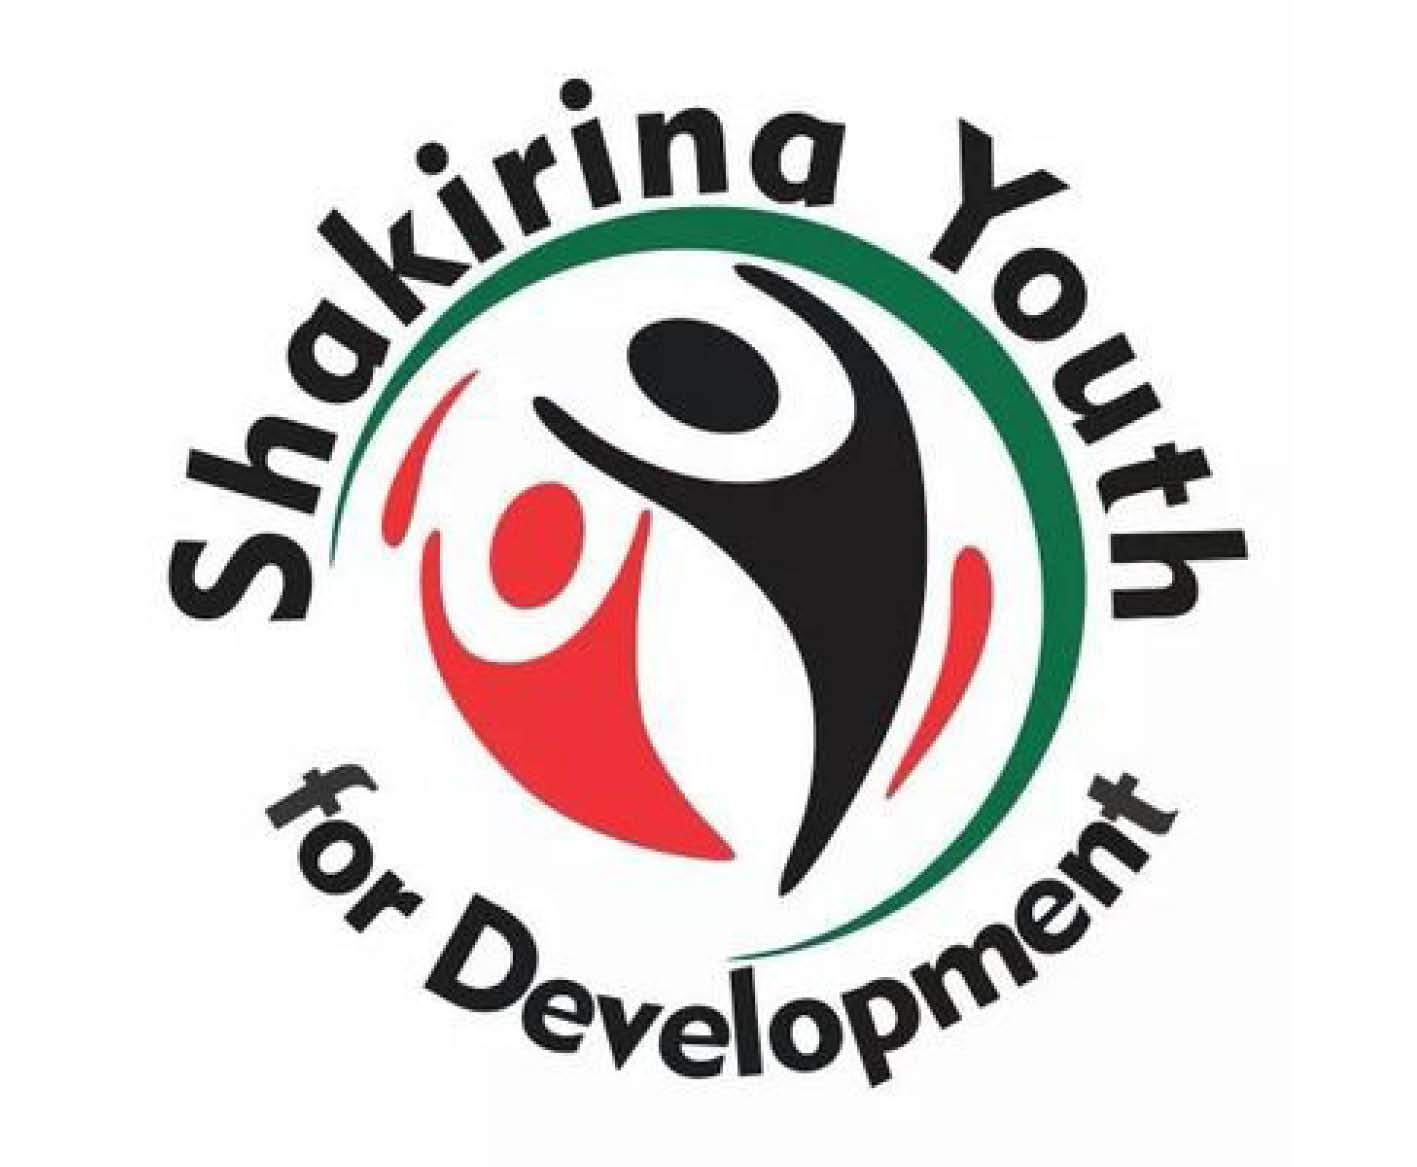 Shakirina Youth for Development